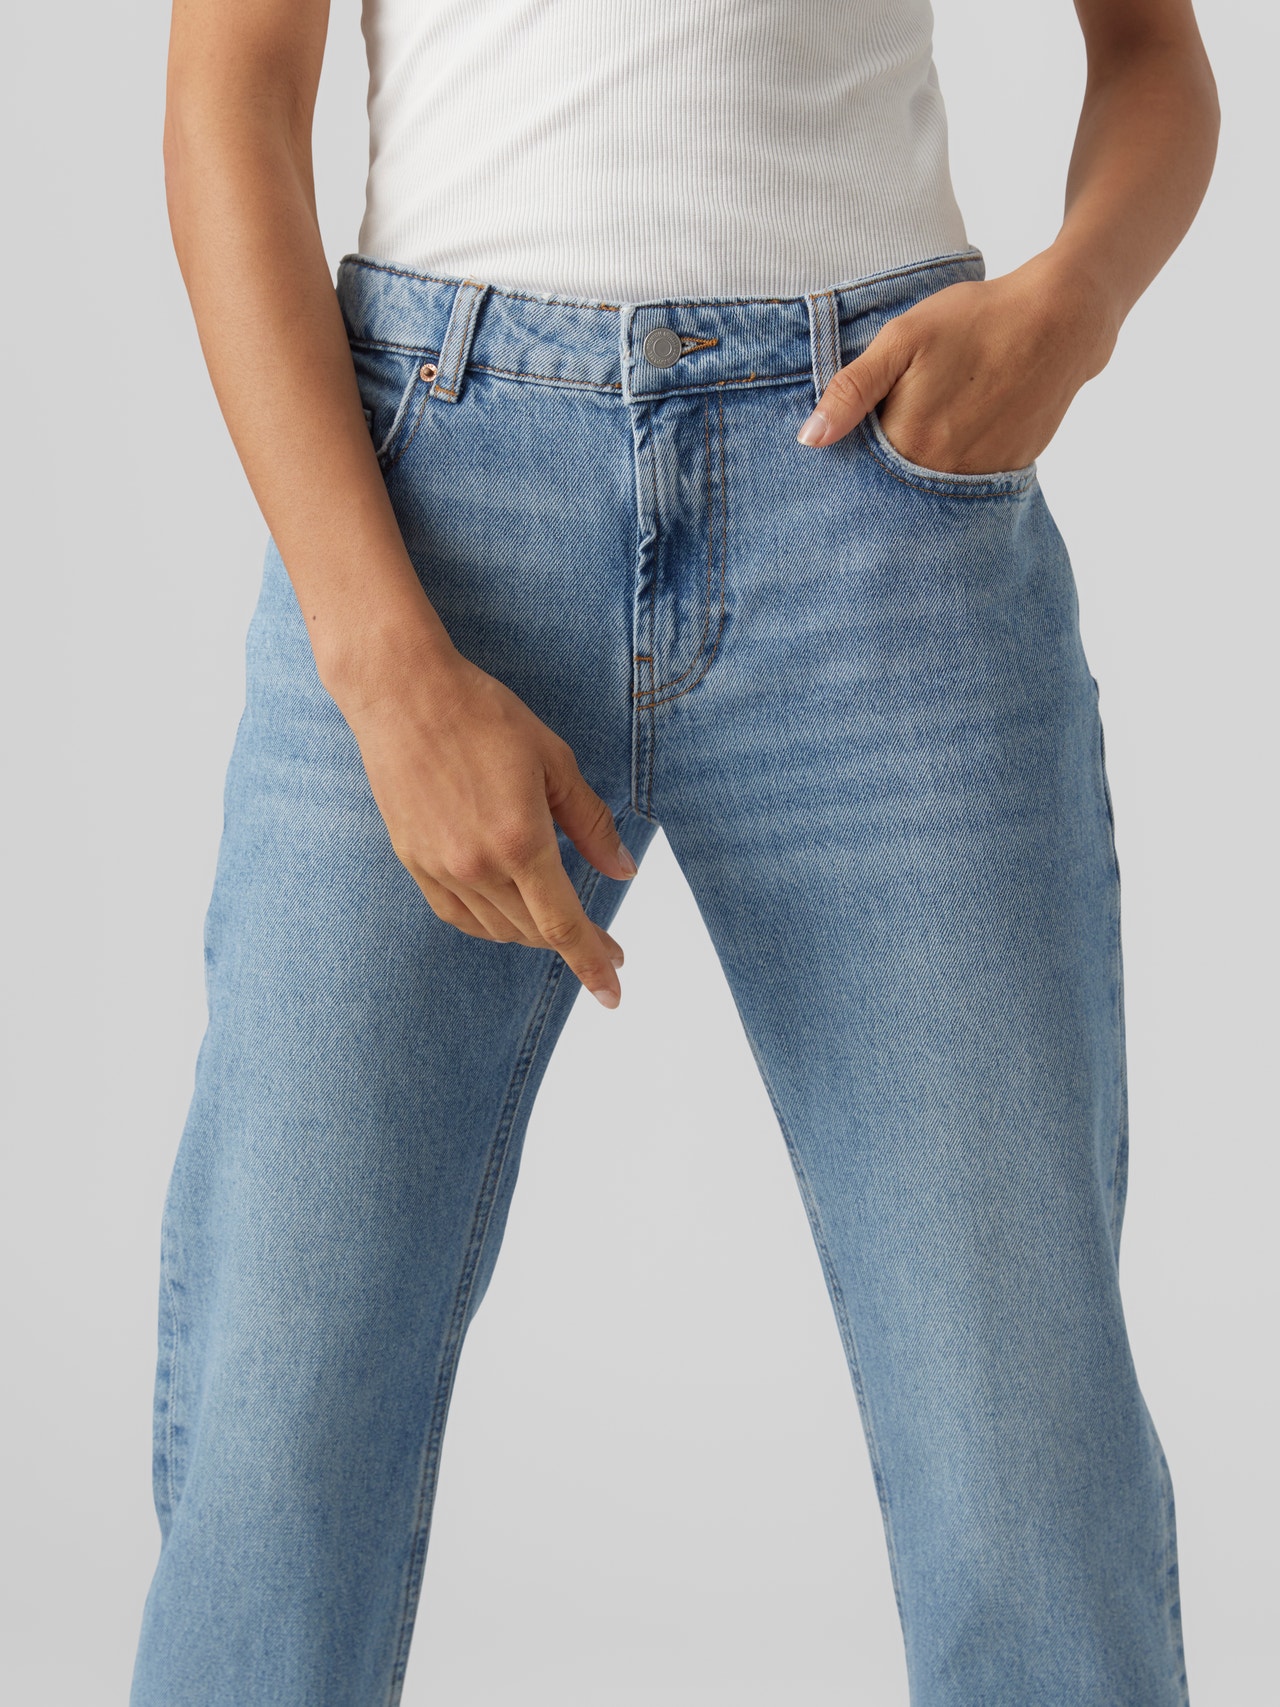 Vero Moda VM90S Niedrige Taille Gerade geschnitten Jeans -Medium Blue Denim - 10285105